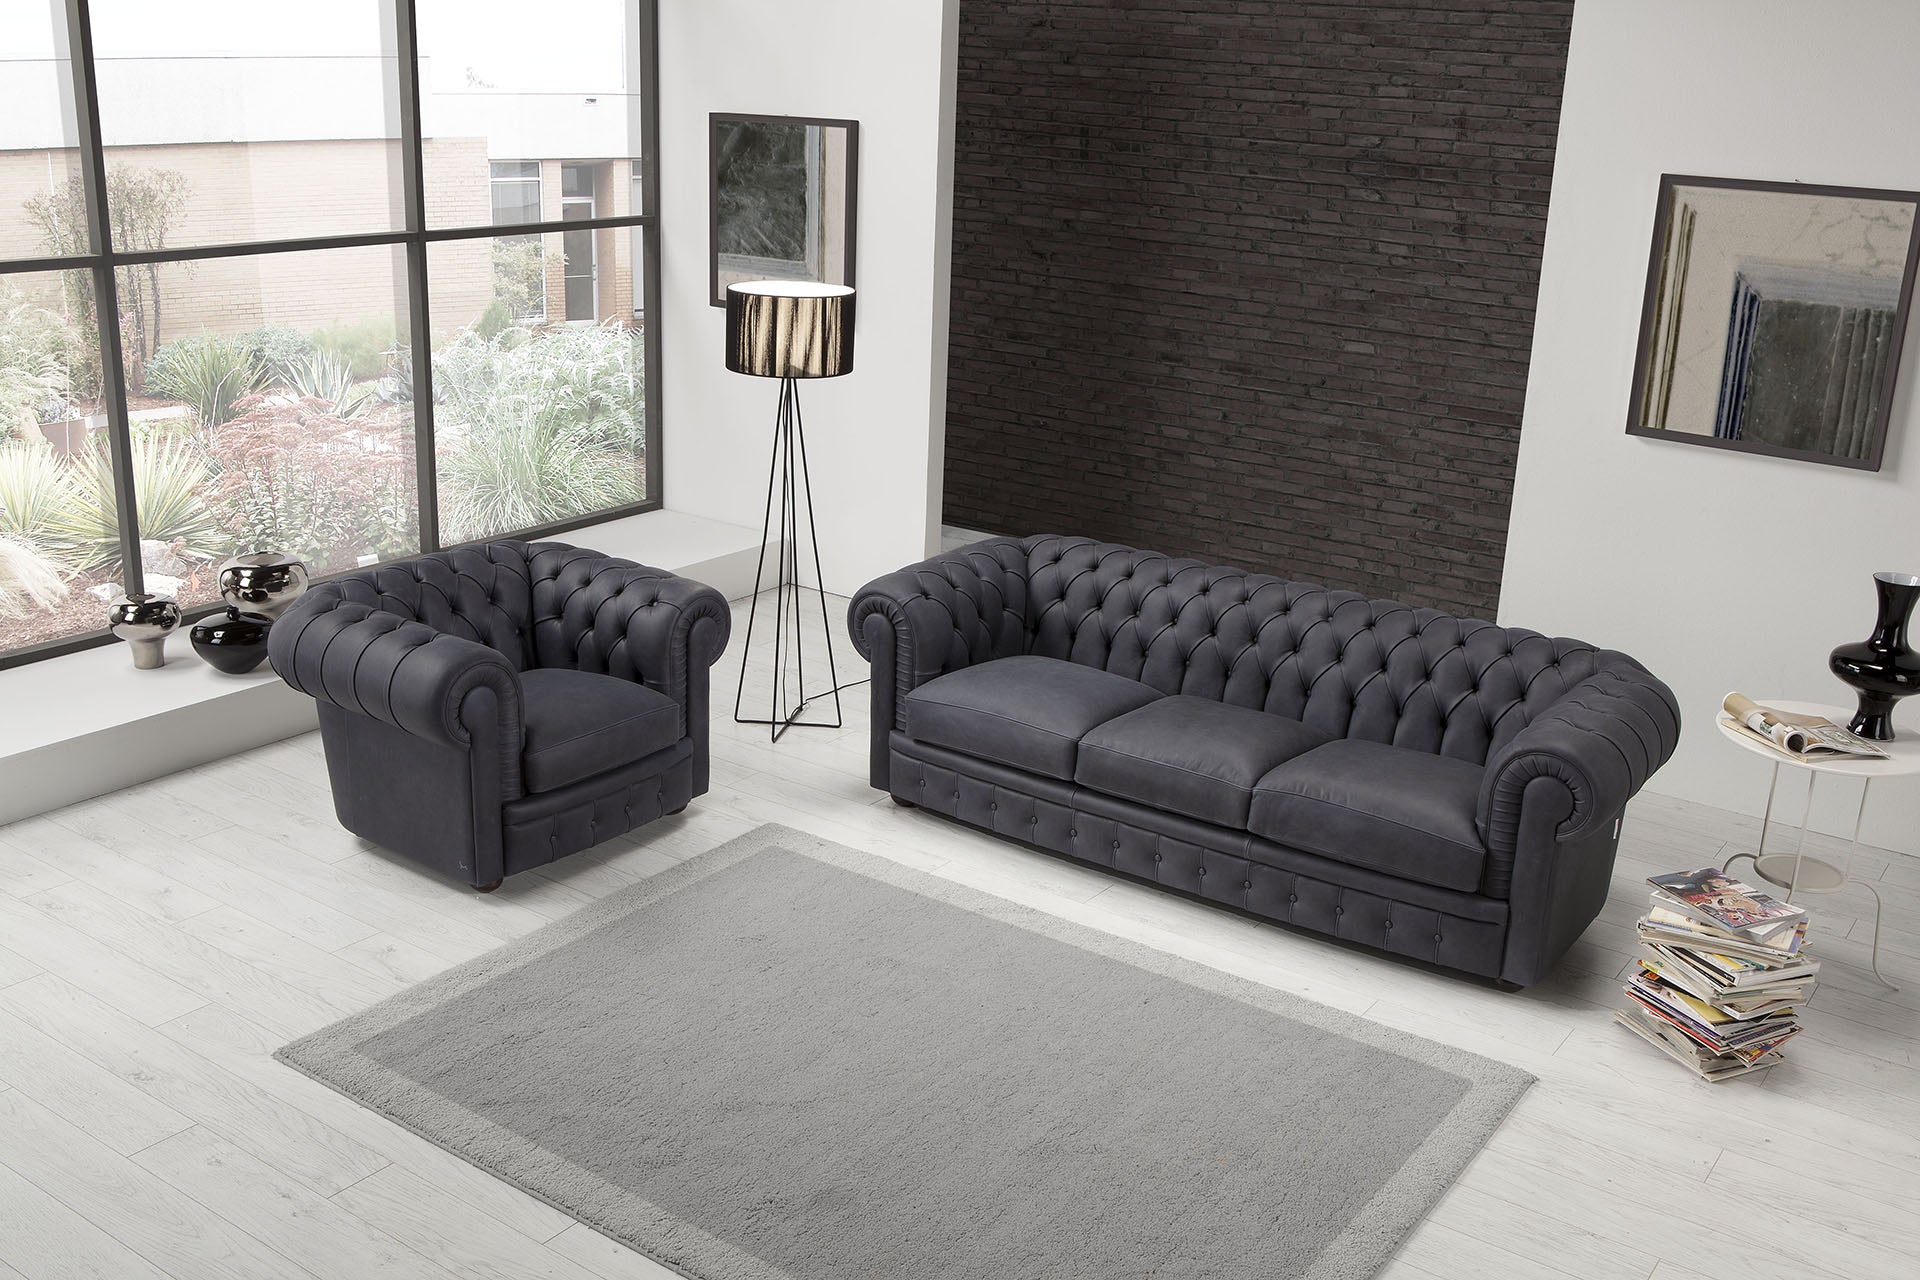 Sir William 3-Seater Leather Sofa